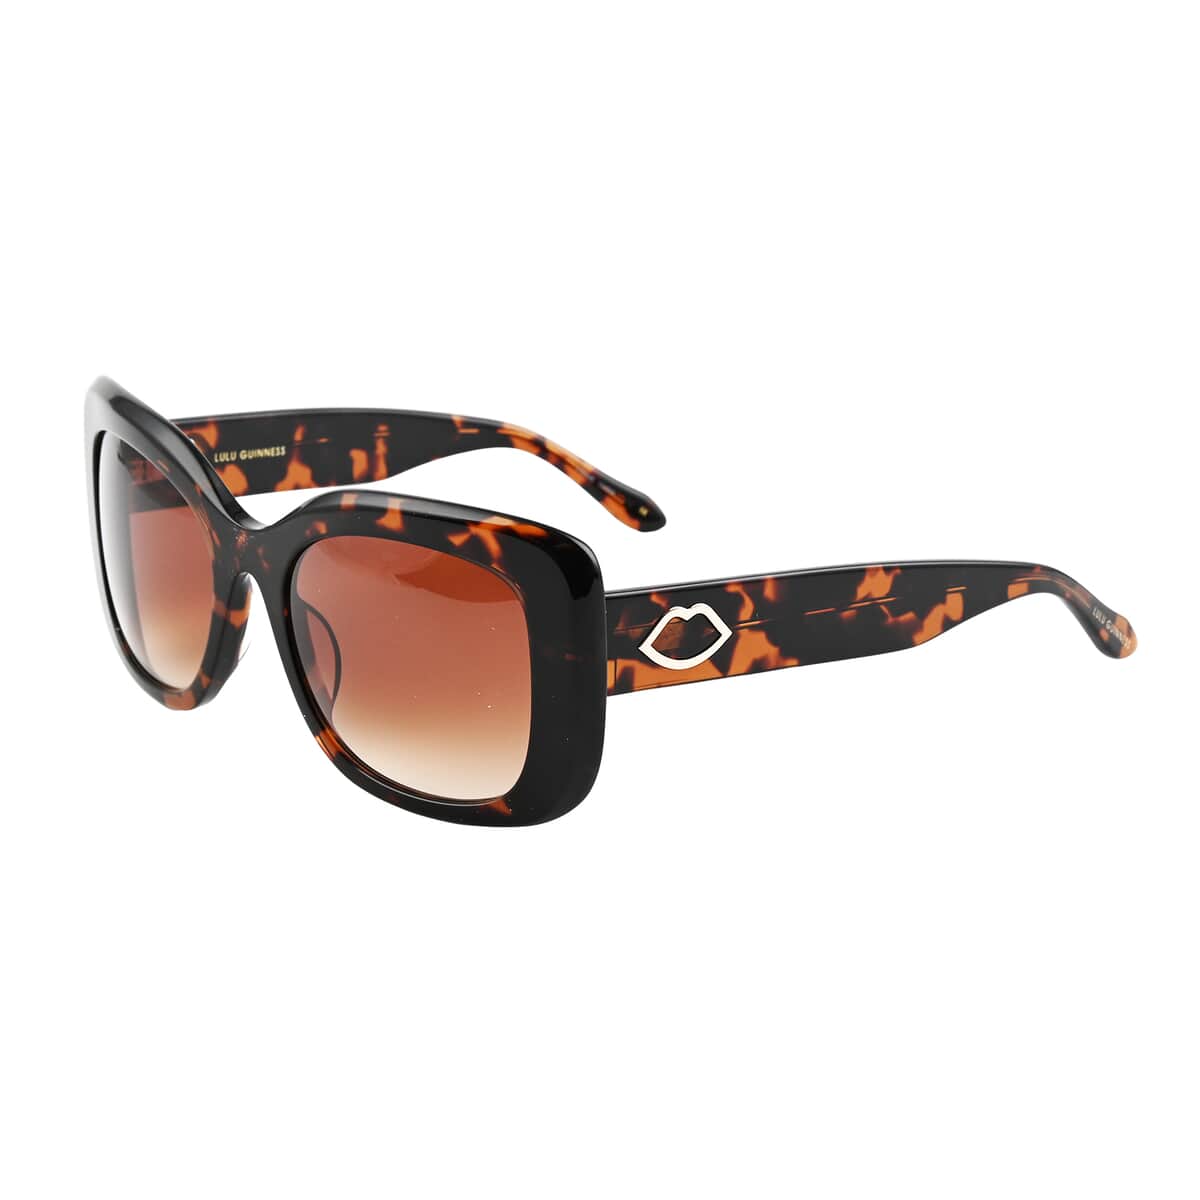 Lulu Guinness Tortoise 100% UV Protection 54mm Butterfly Sunglasses with Case | UV Butterfly Sunglasses | Designer Polarized Sunglasses image number 0